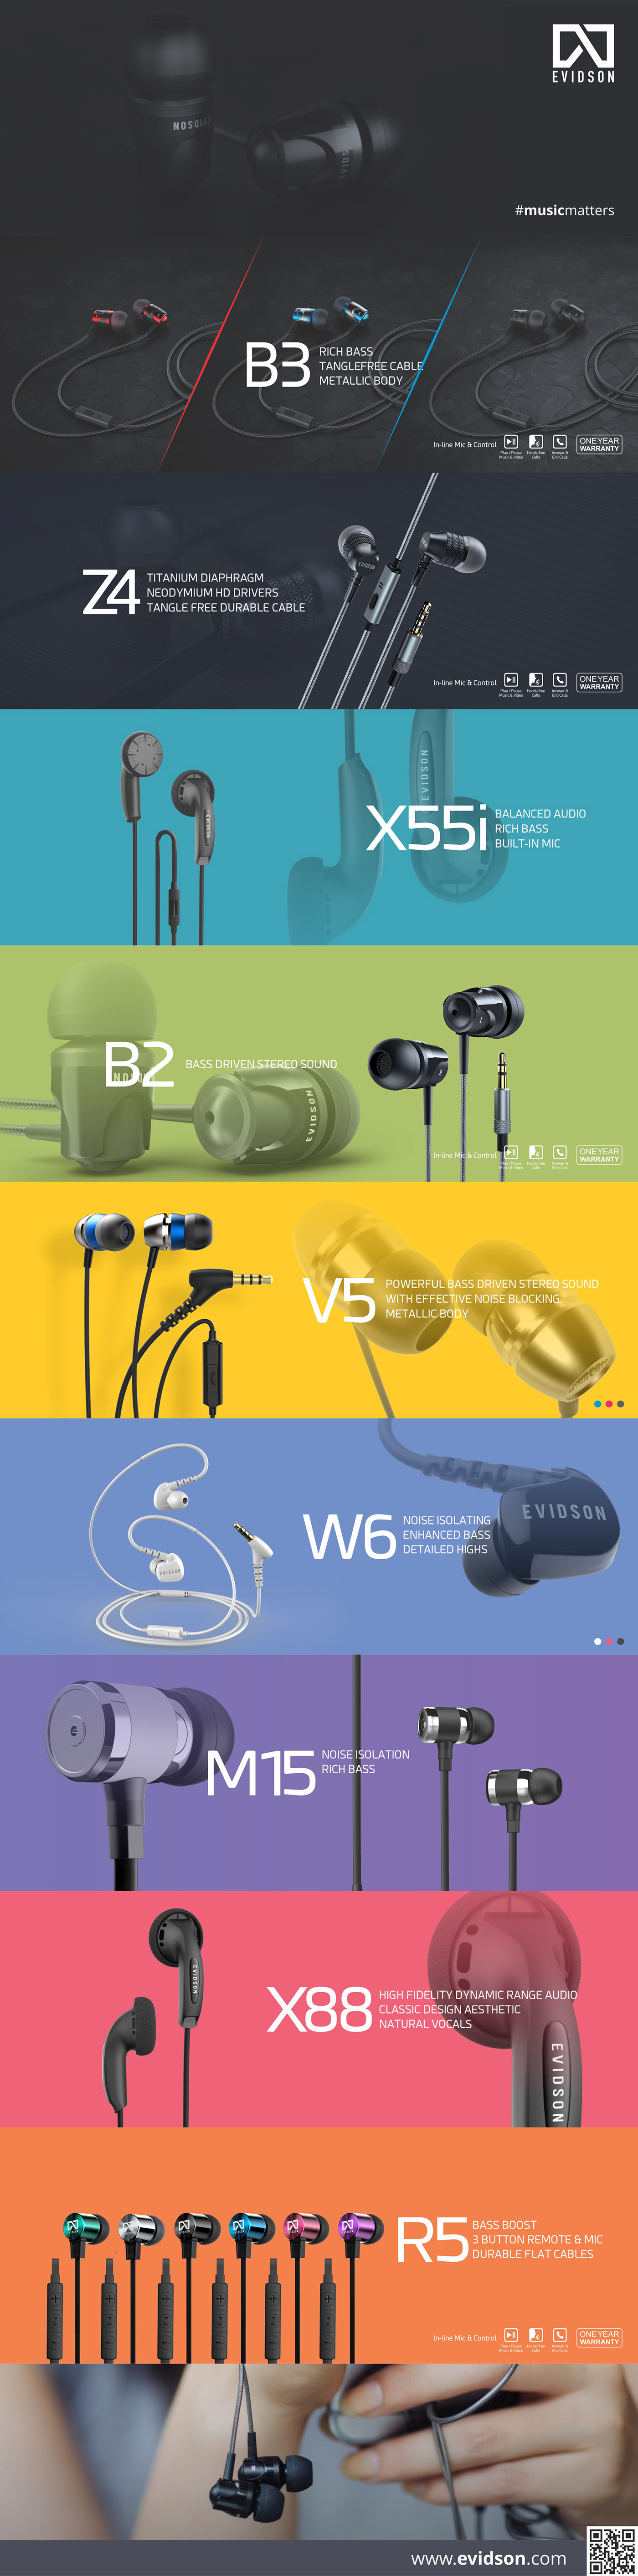 AjuPunnakkal Artmonk Audio earphone Evidson headphone music product design 